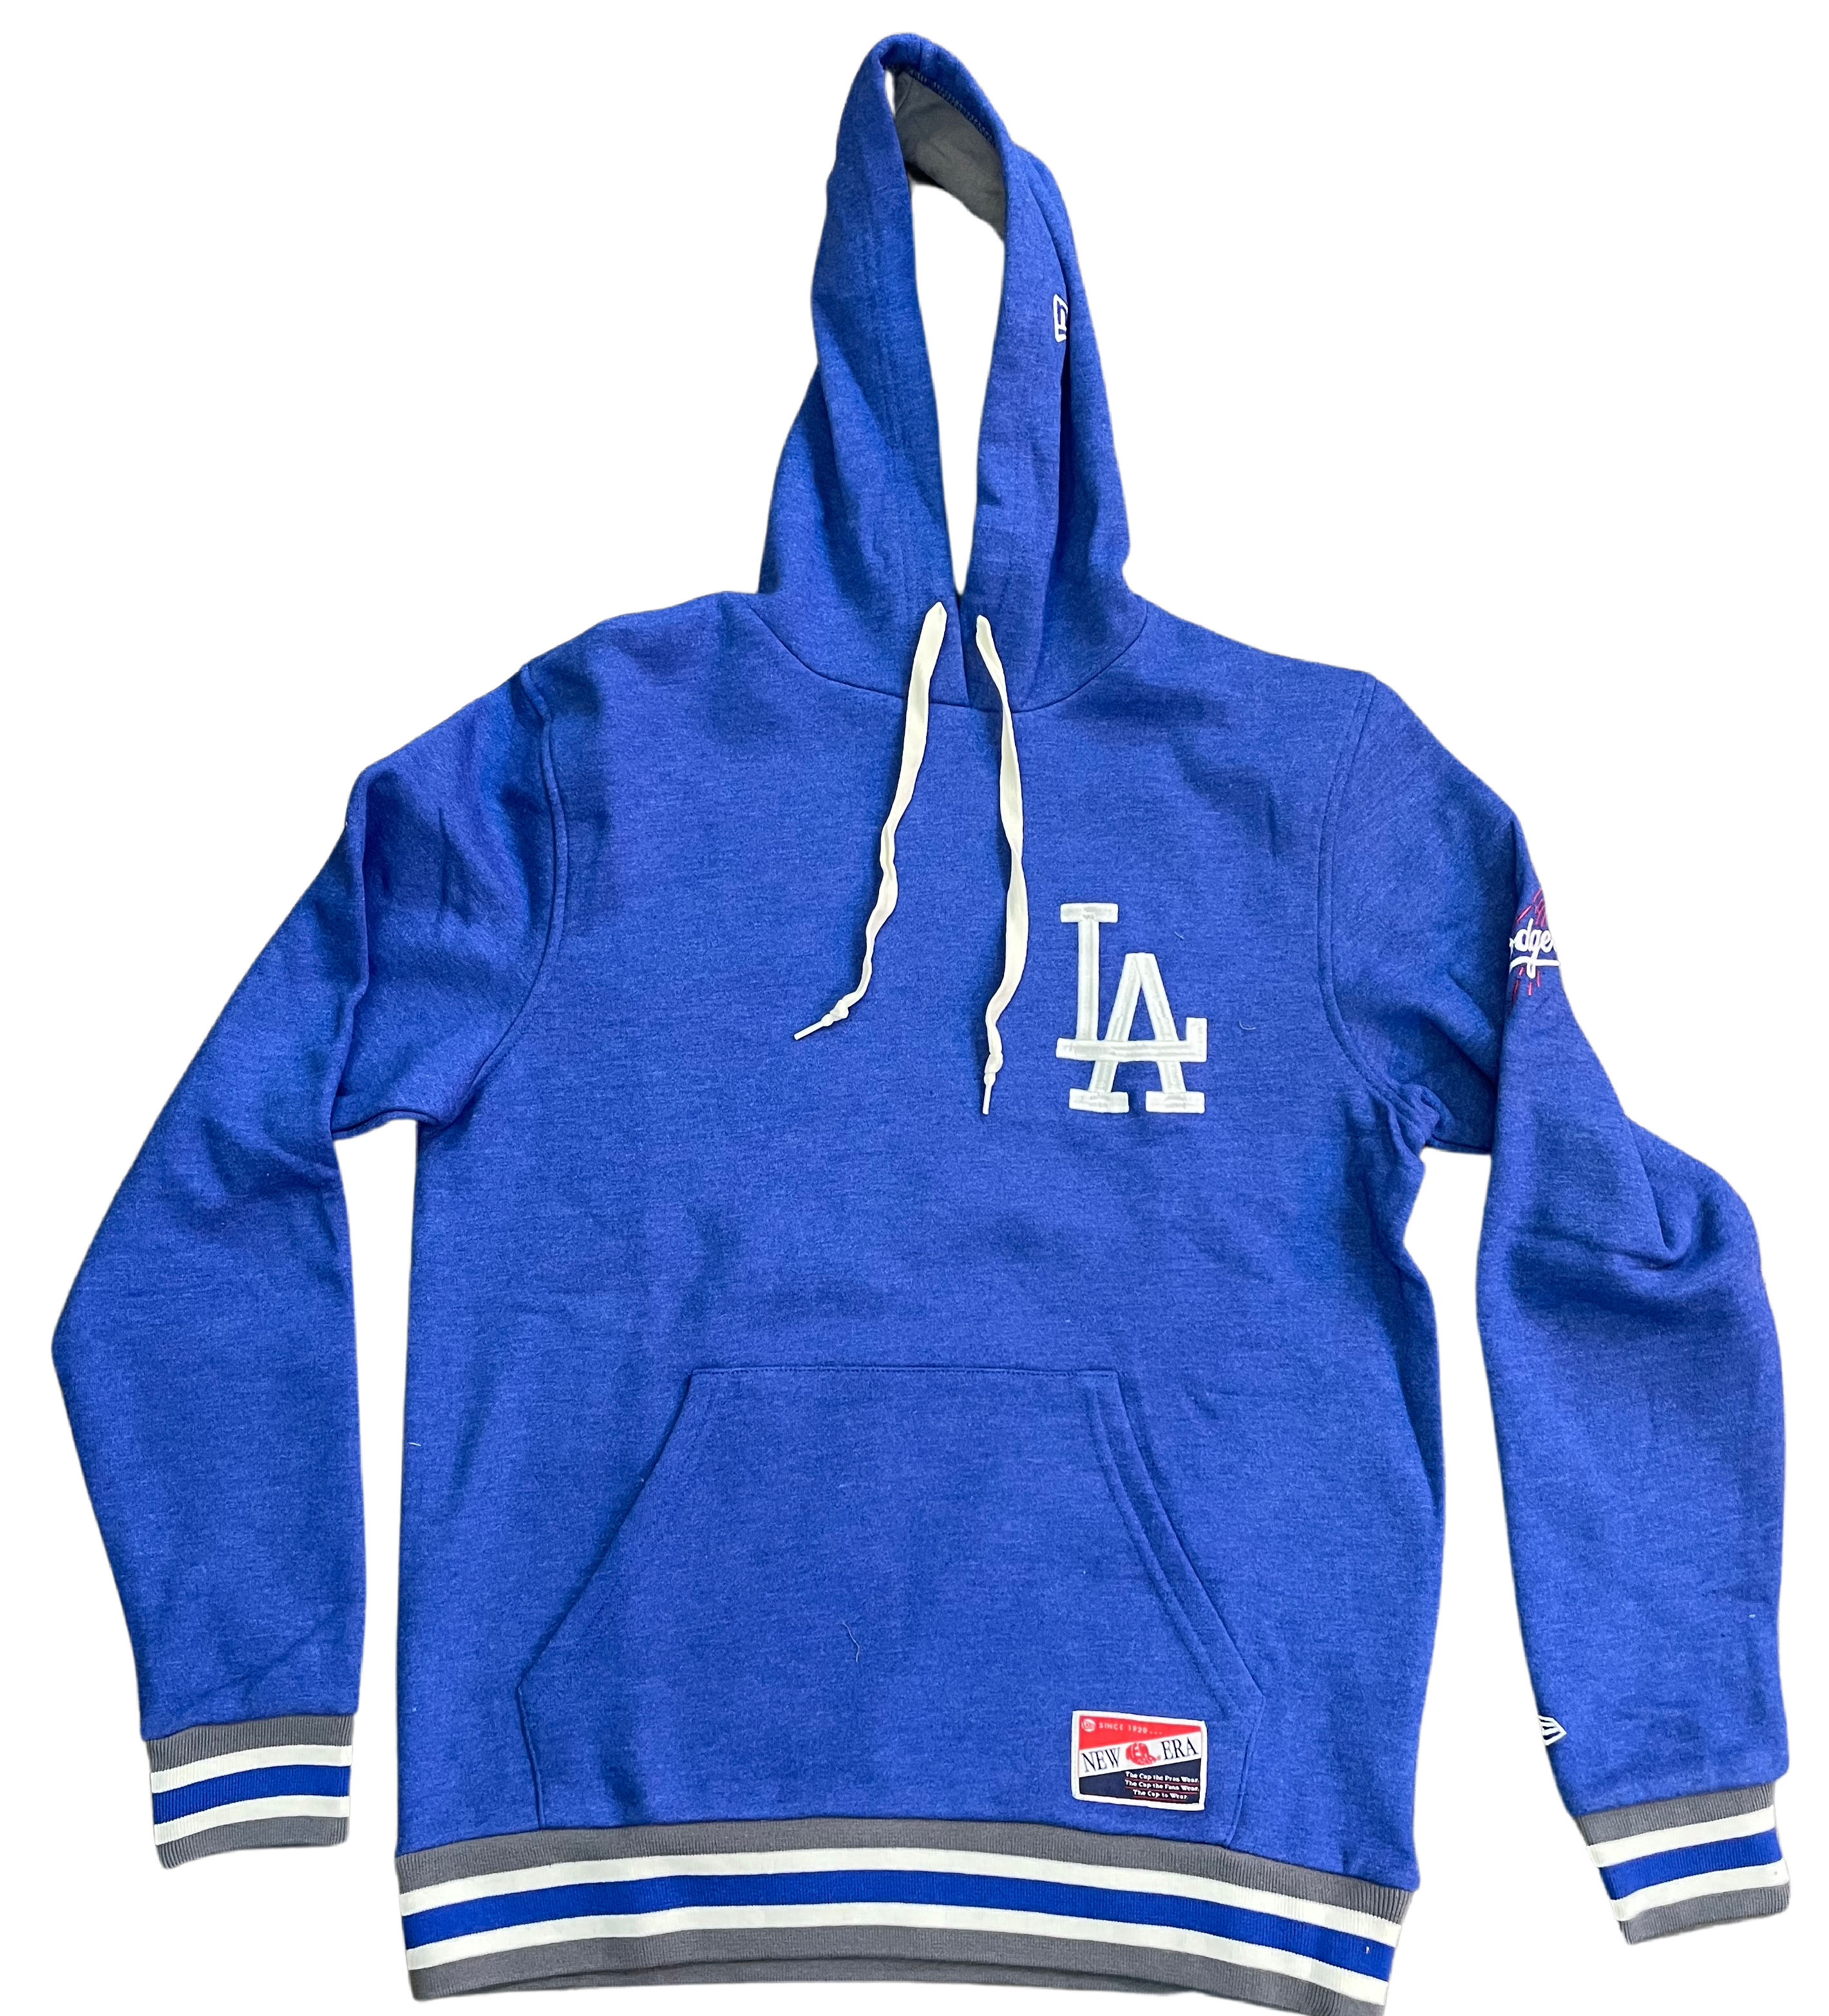 New Era Men's Los Angeles Dodgers Est.1958 Throwback Hoodie